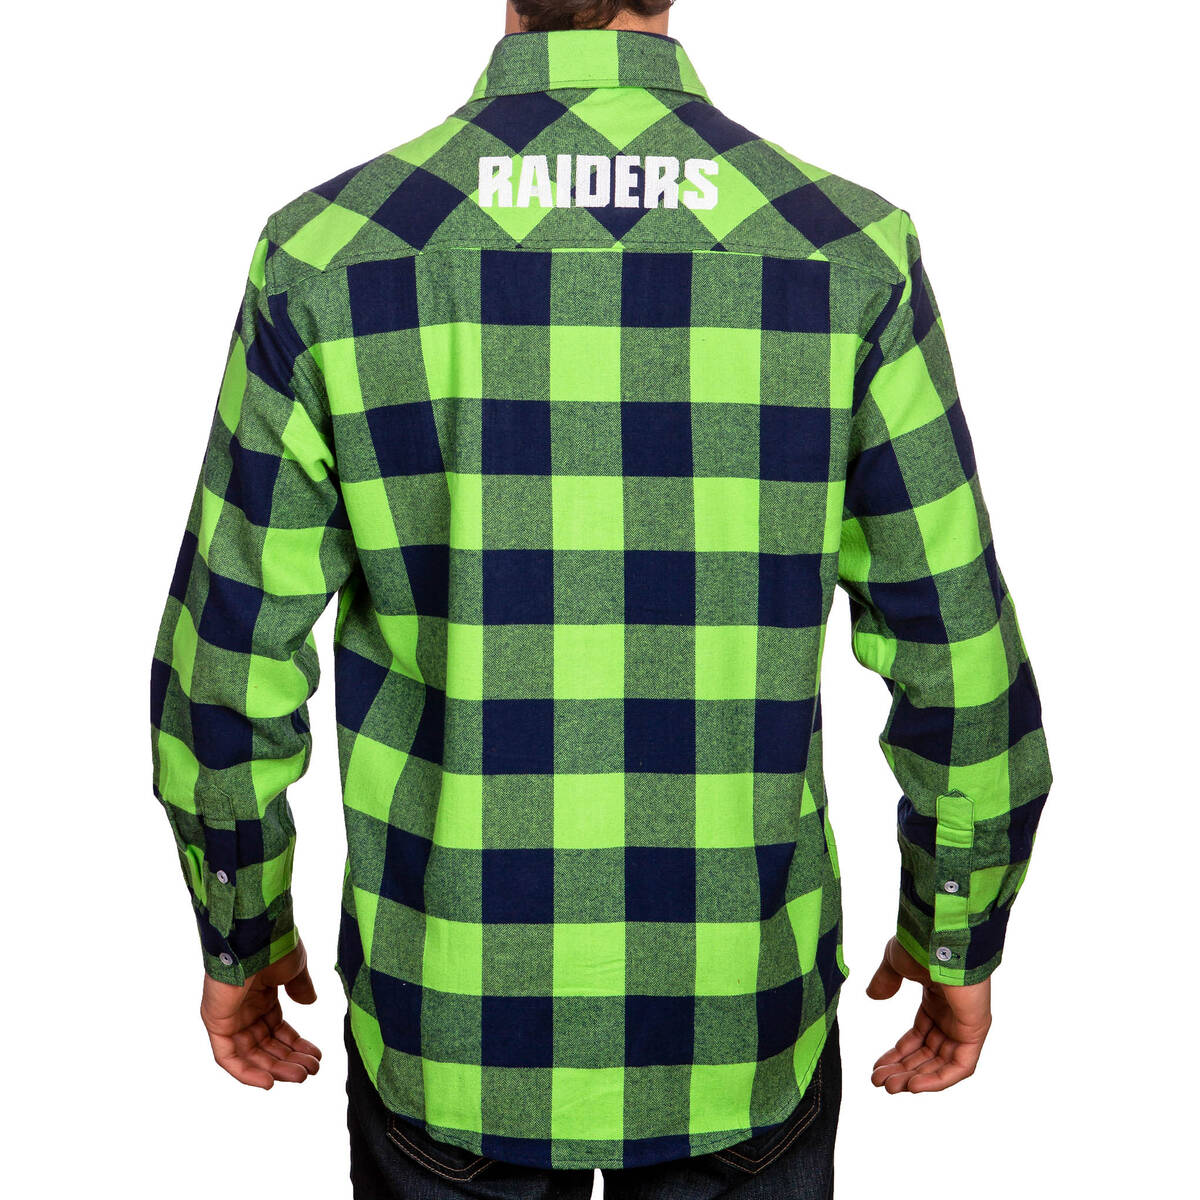 Raiders Lumberjack Flannel Shirt1